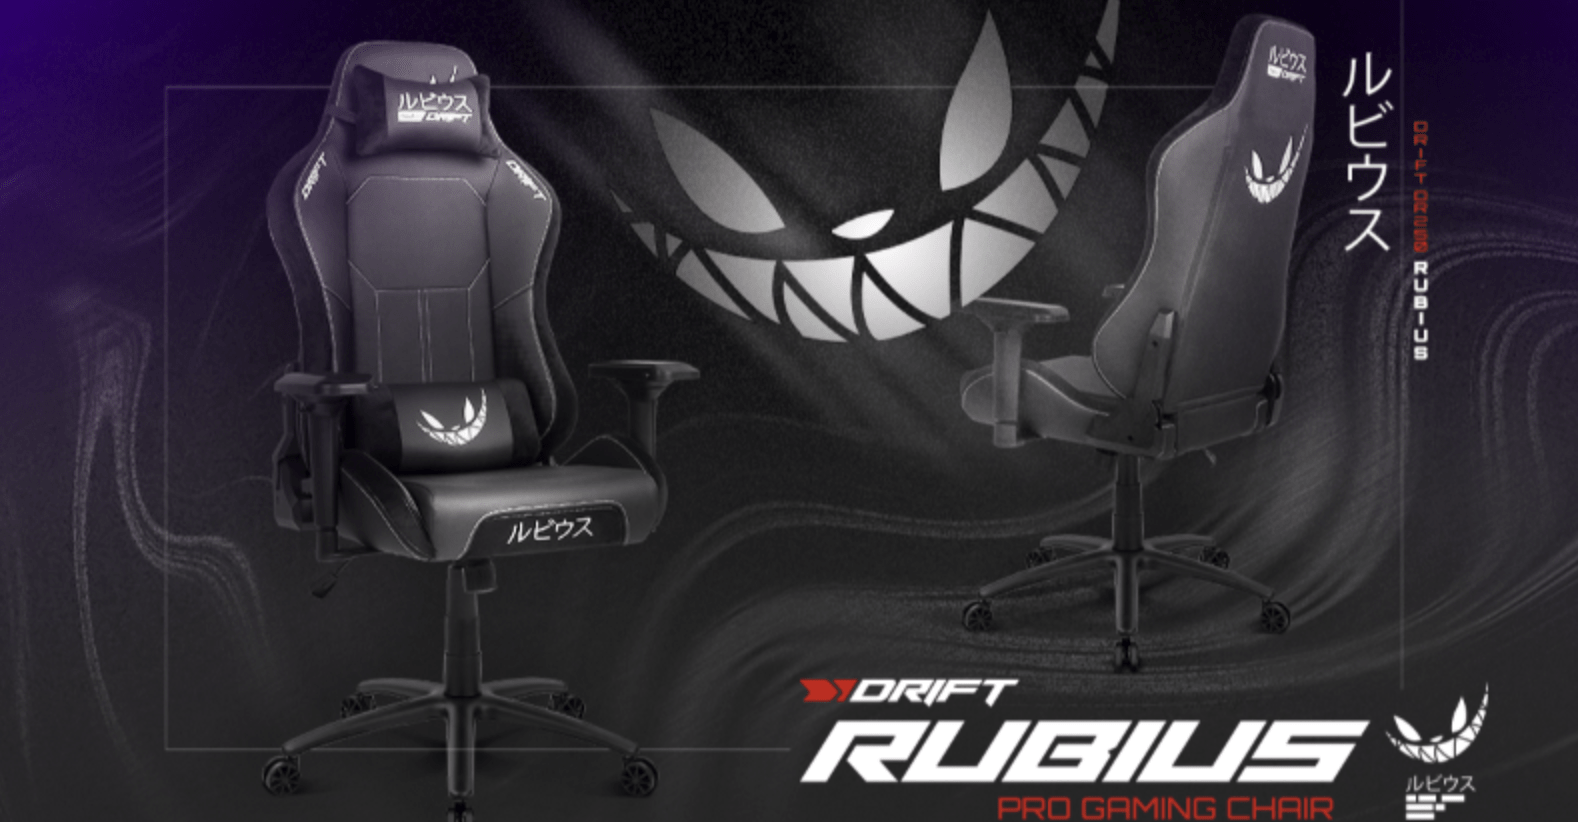 La cadira gamer dissenyada pel Rubius i Drift Gaming. / Twitter